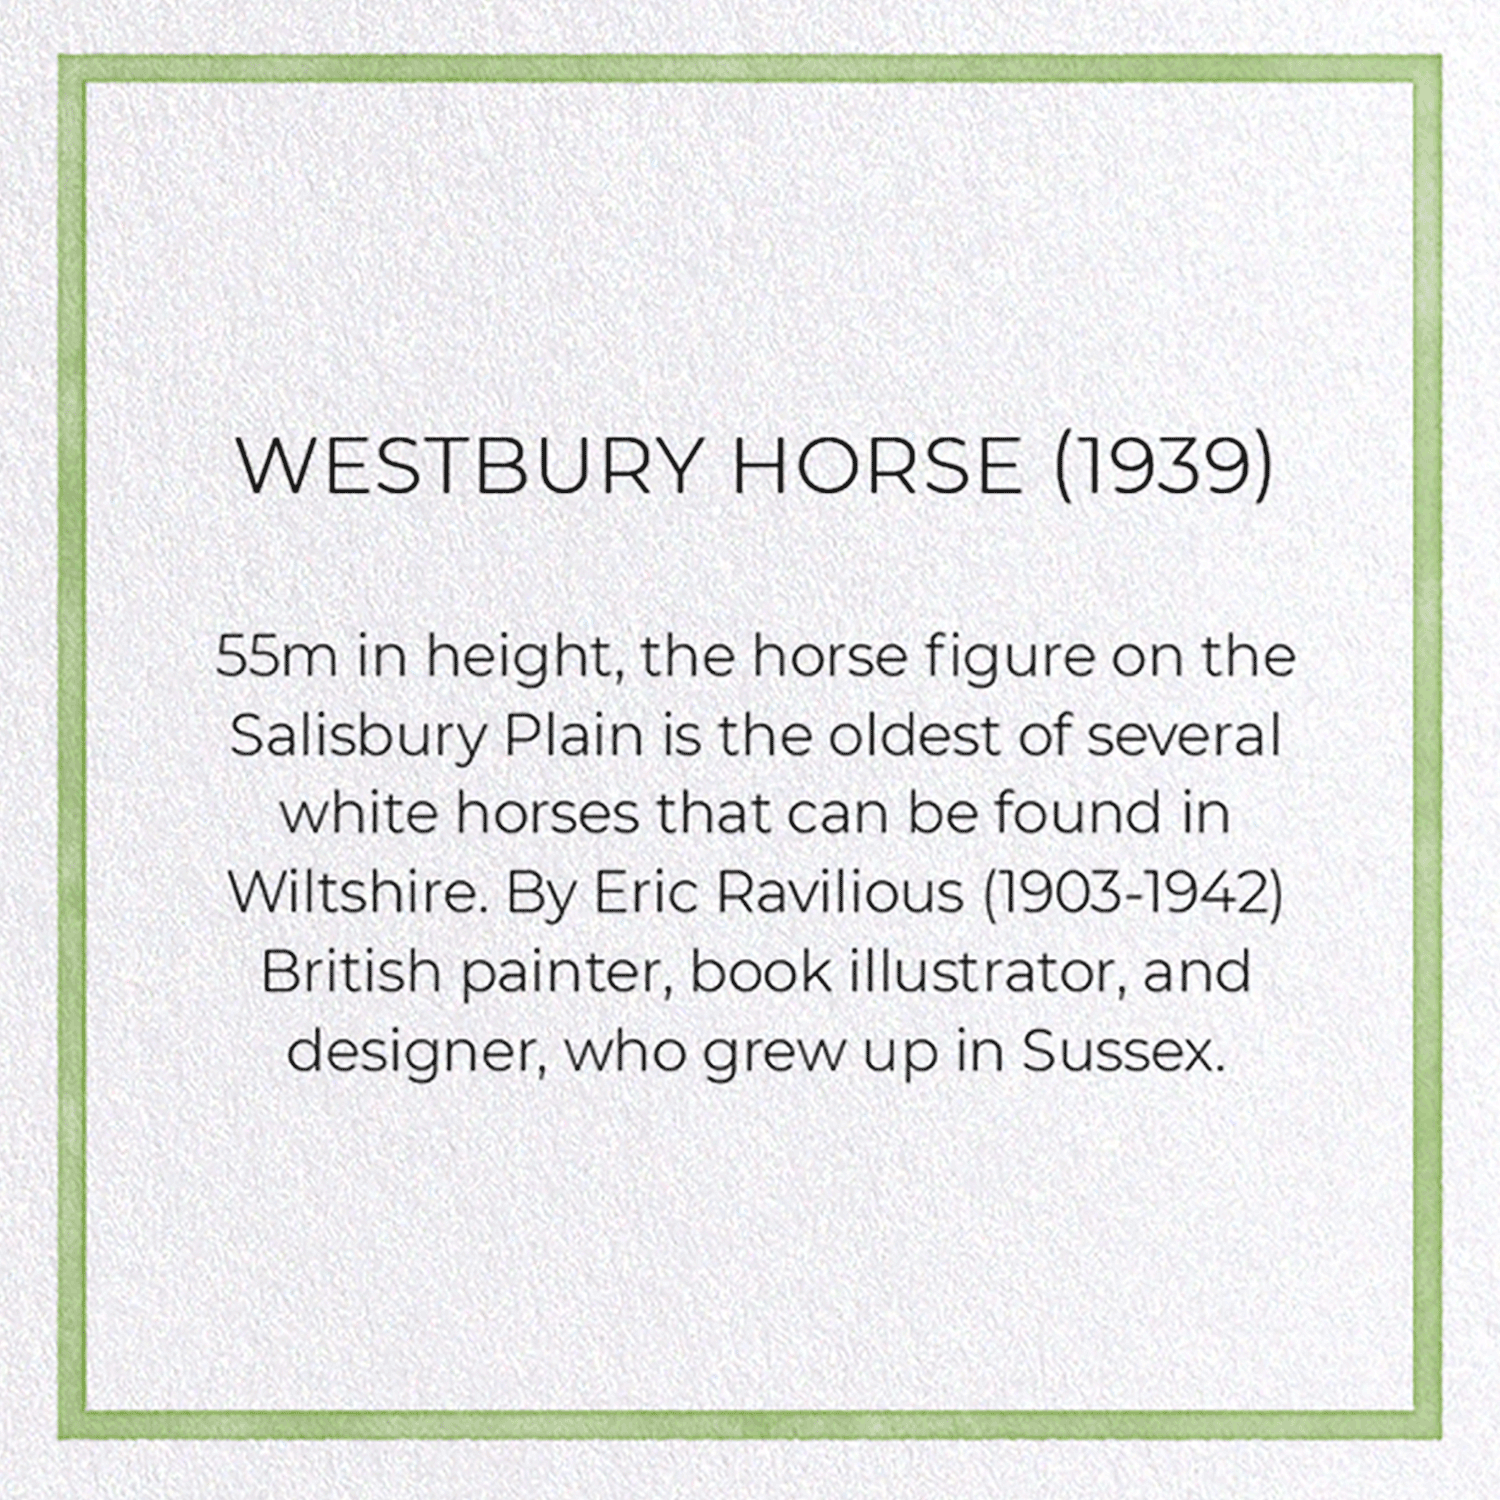 WESTBURY HORSE (1939)